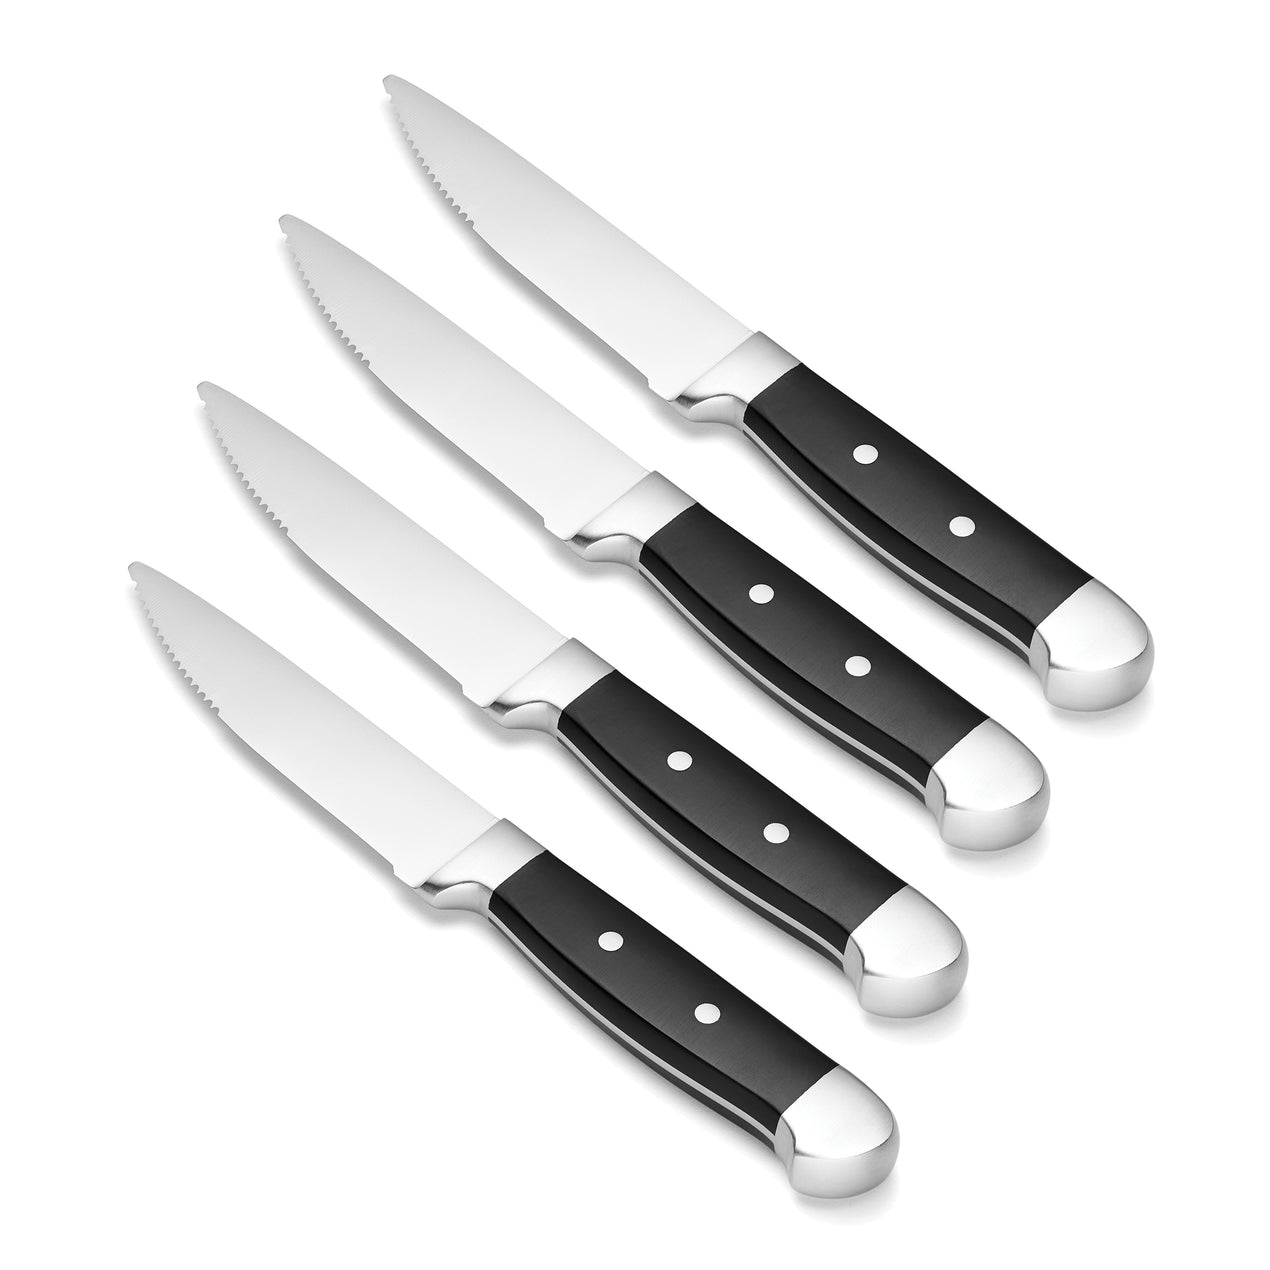 Garrison Steak Knife Set, Hampton Forge - 4 ct